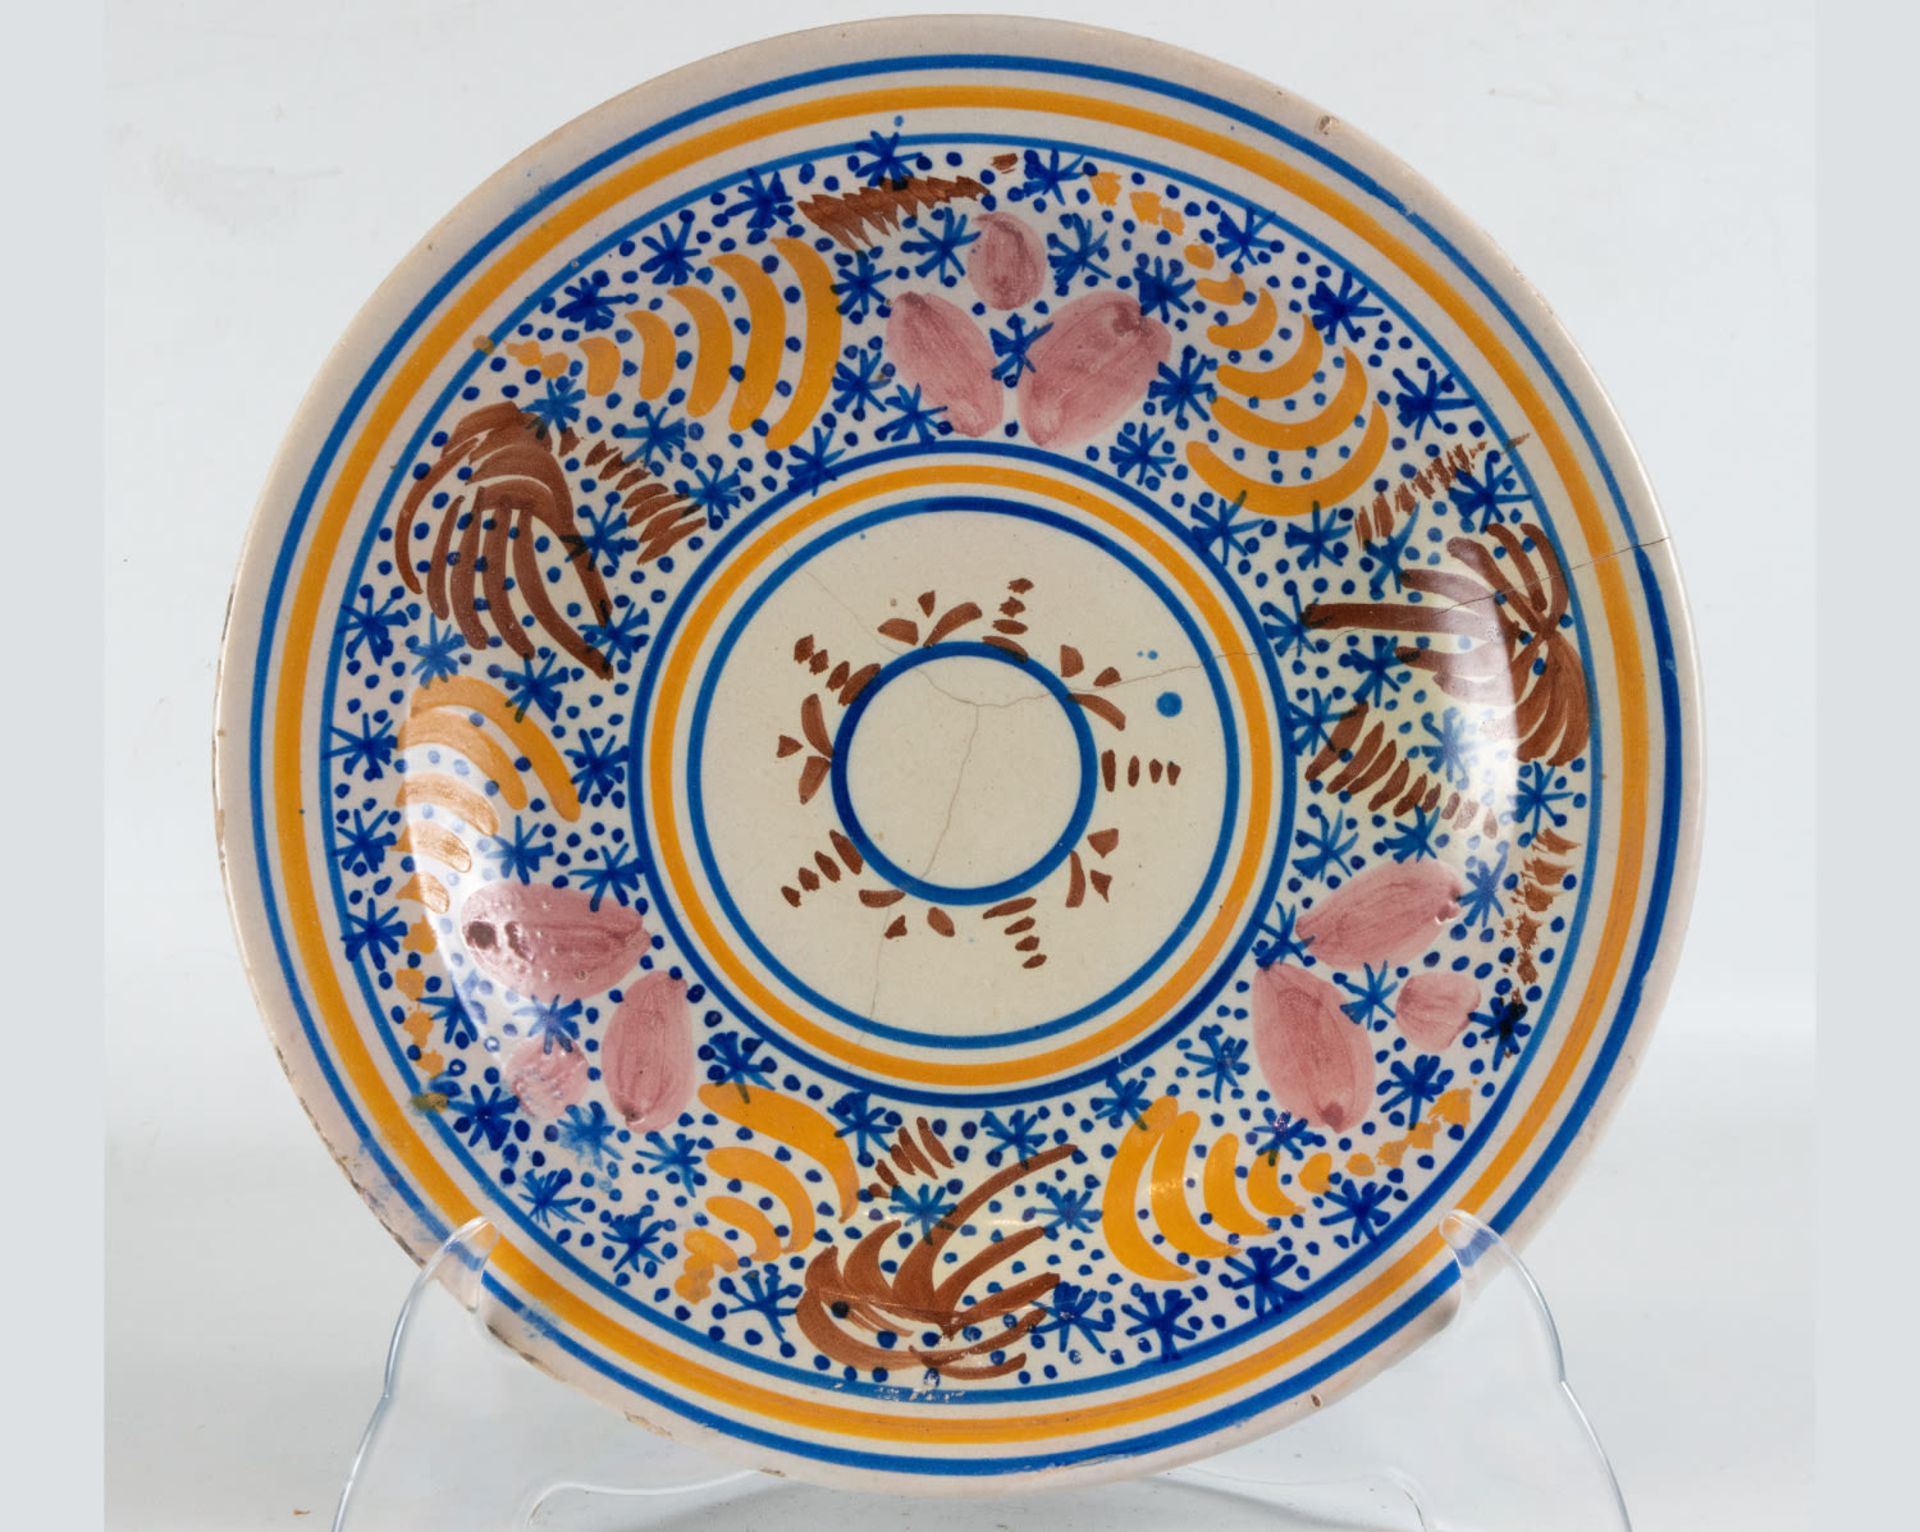 Ceramic plate from Manises, 20th century